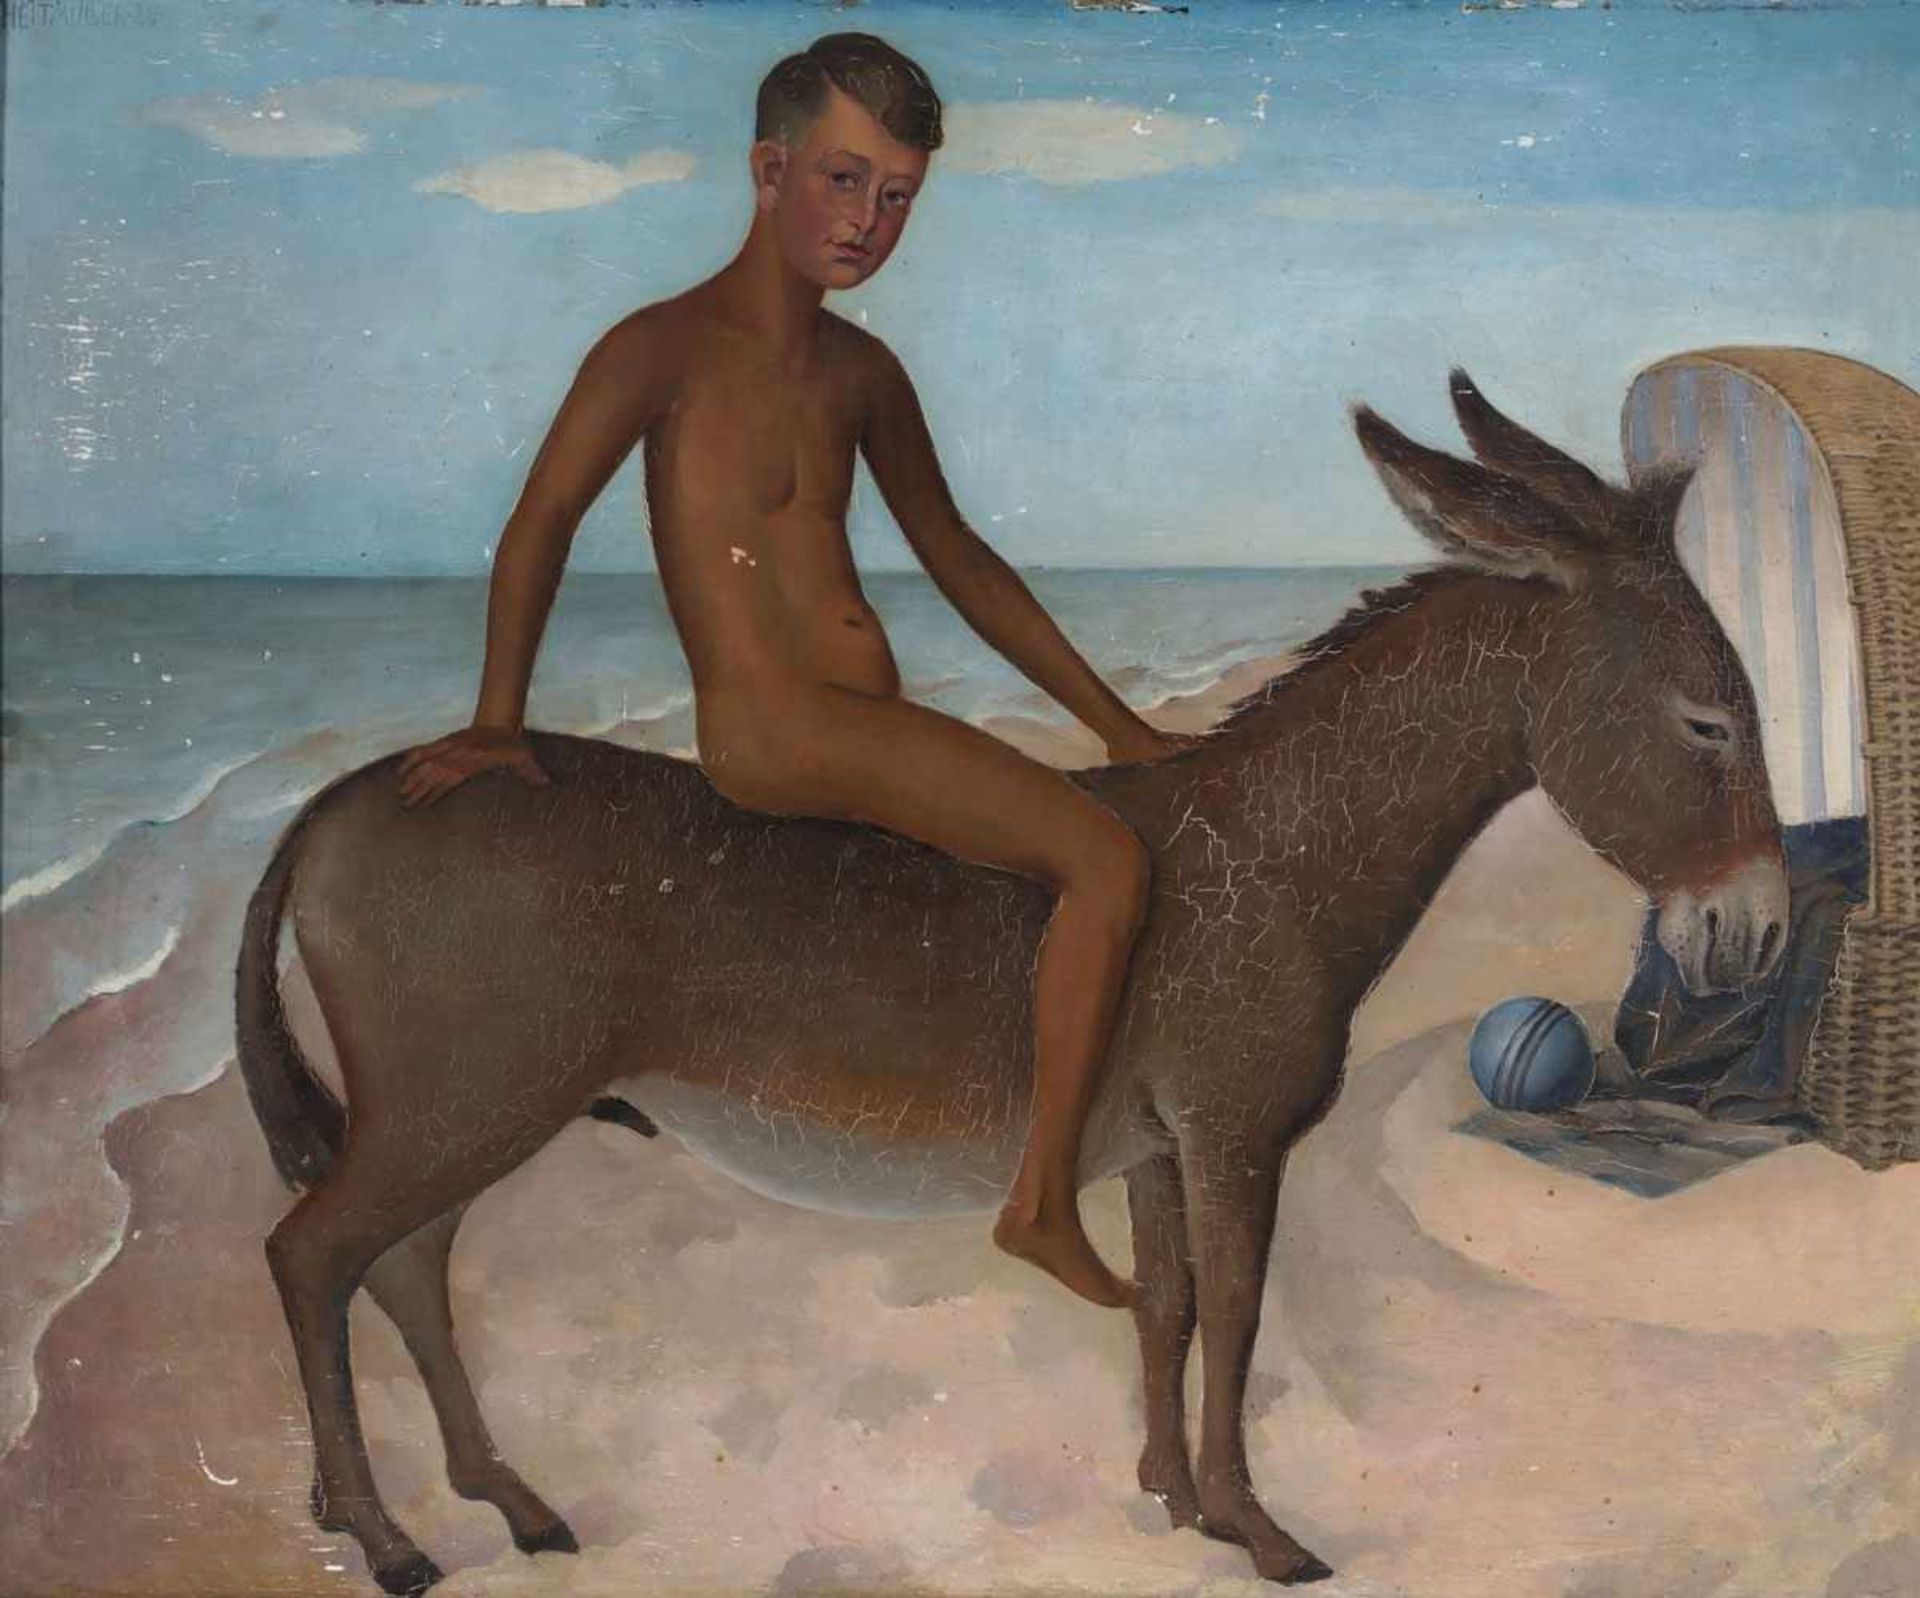 August Heitmüller 1873 Gummer - 1935 Hannover - Junge auf einem Esel am Strand - Öl/Holz. 90 x 110